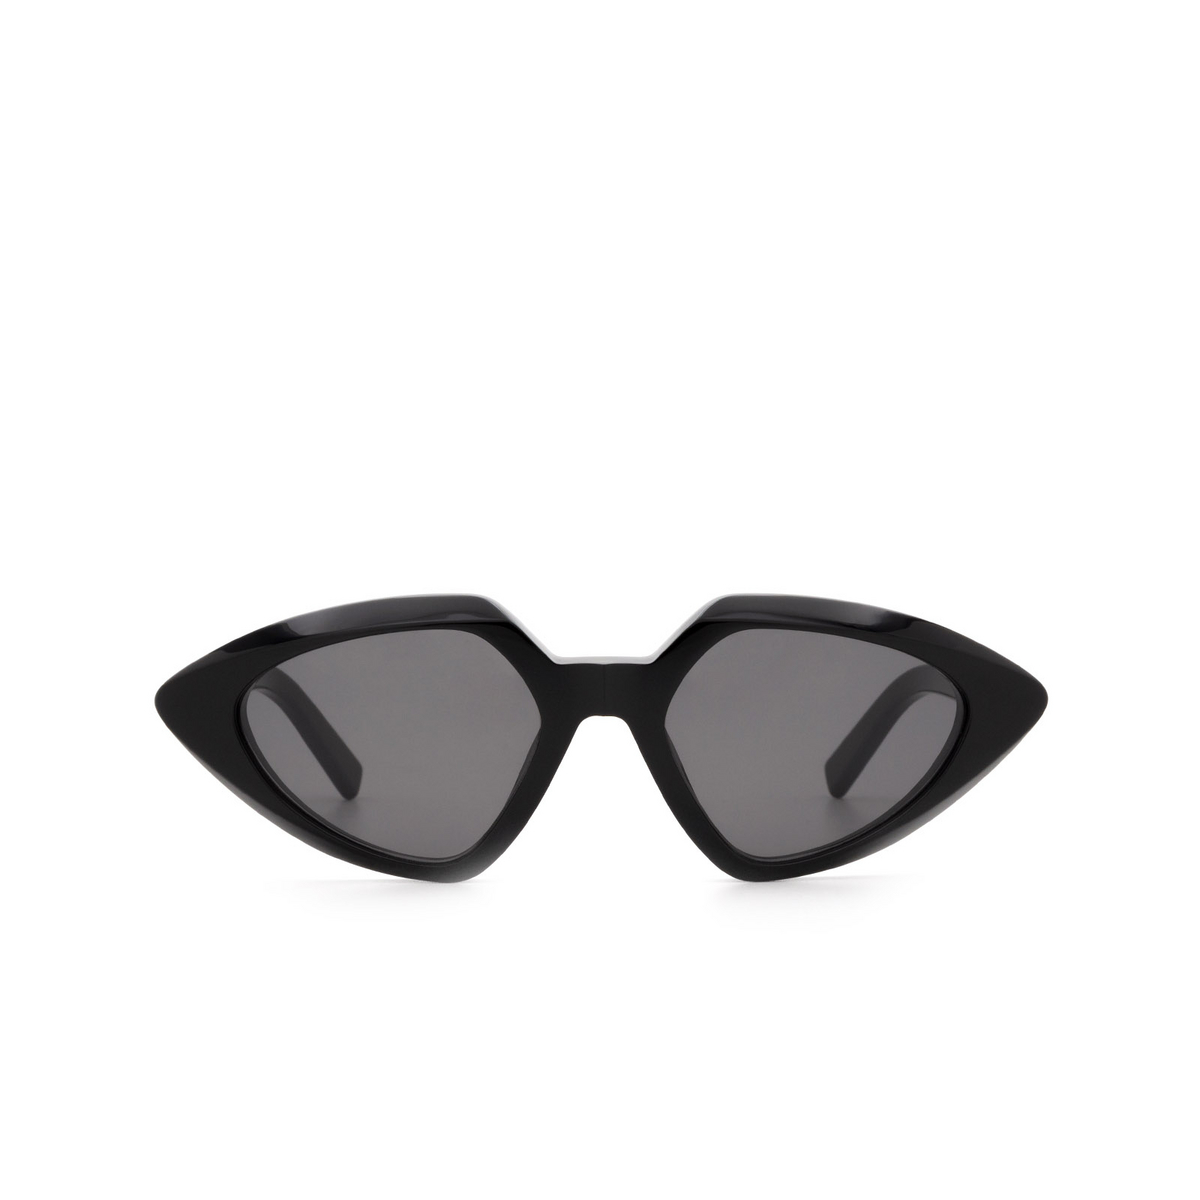 Sportmax® Irregular Sunglasses: SM0005 color Shiny Black 01A - front view.